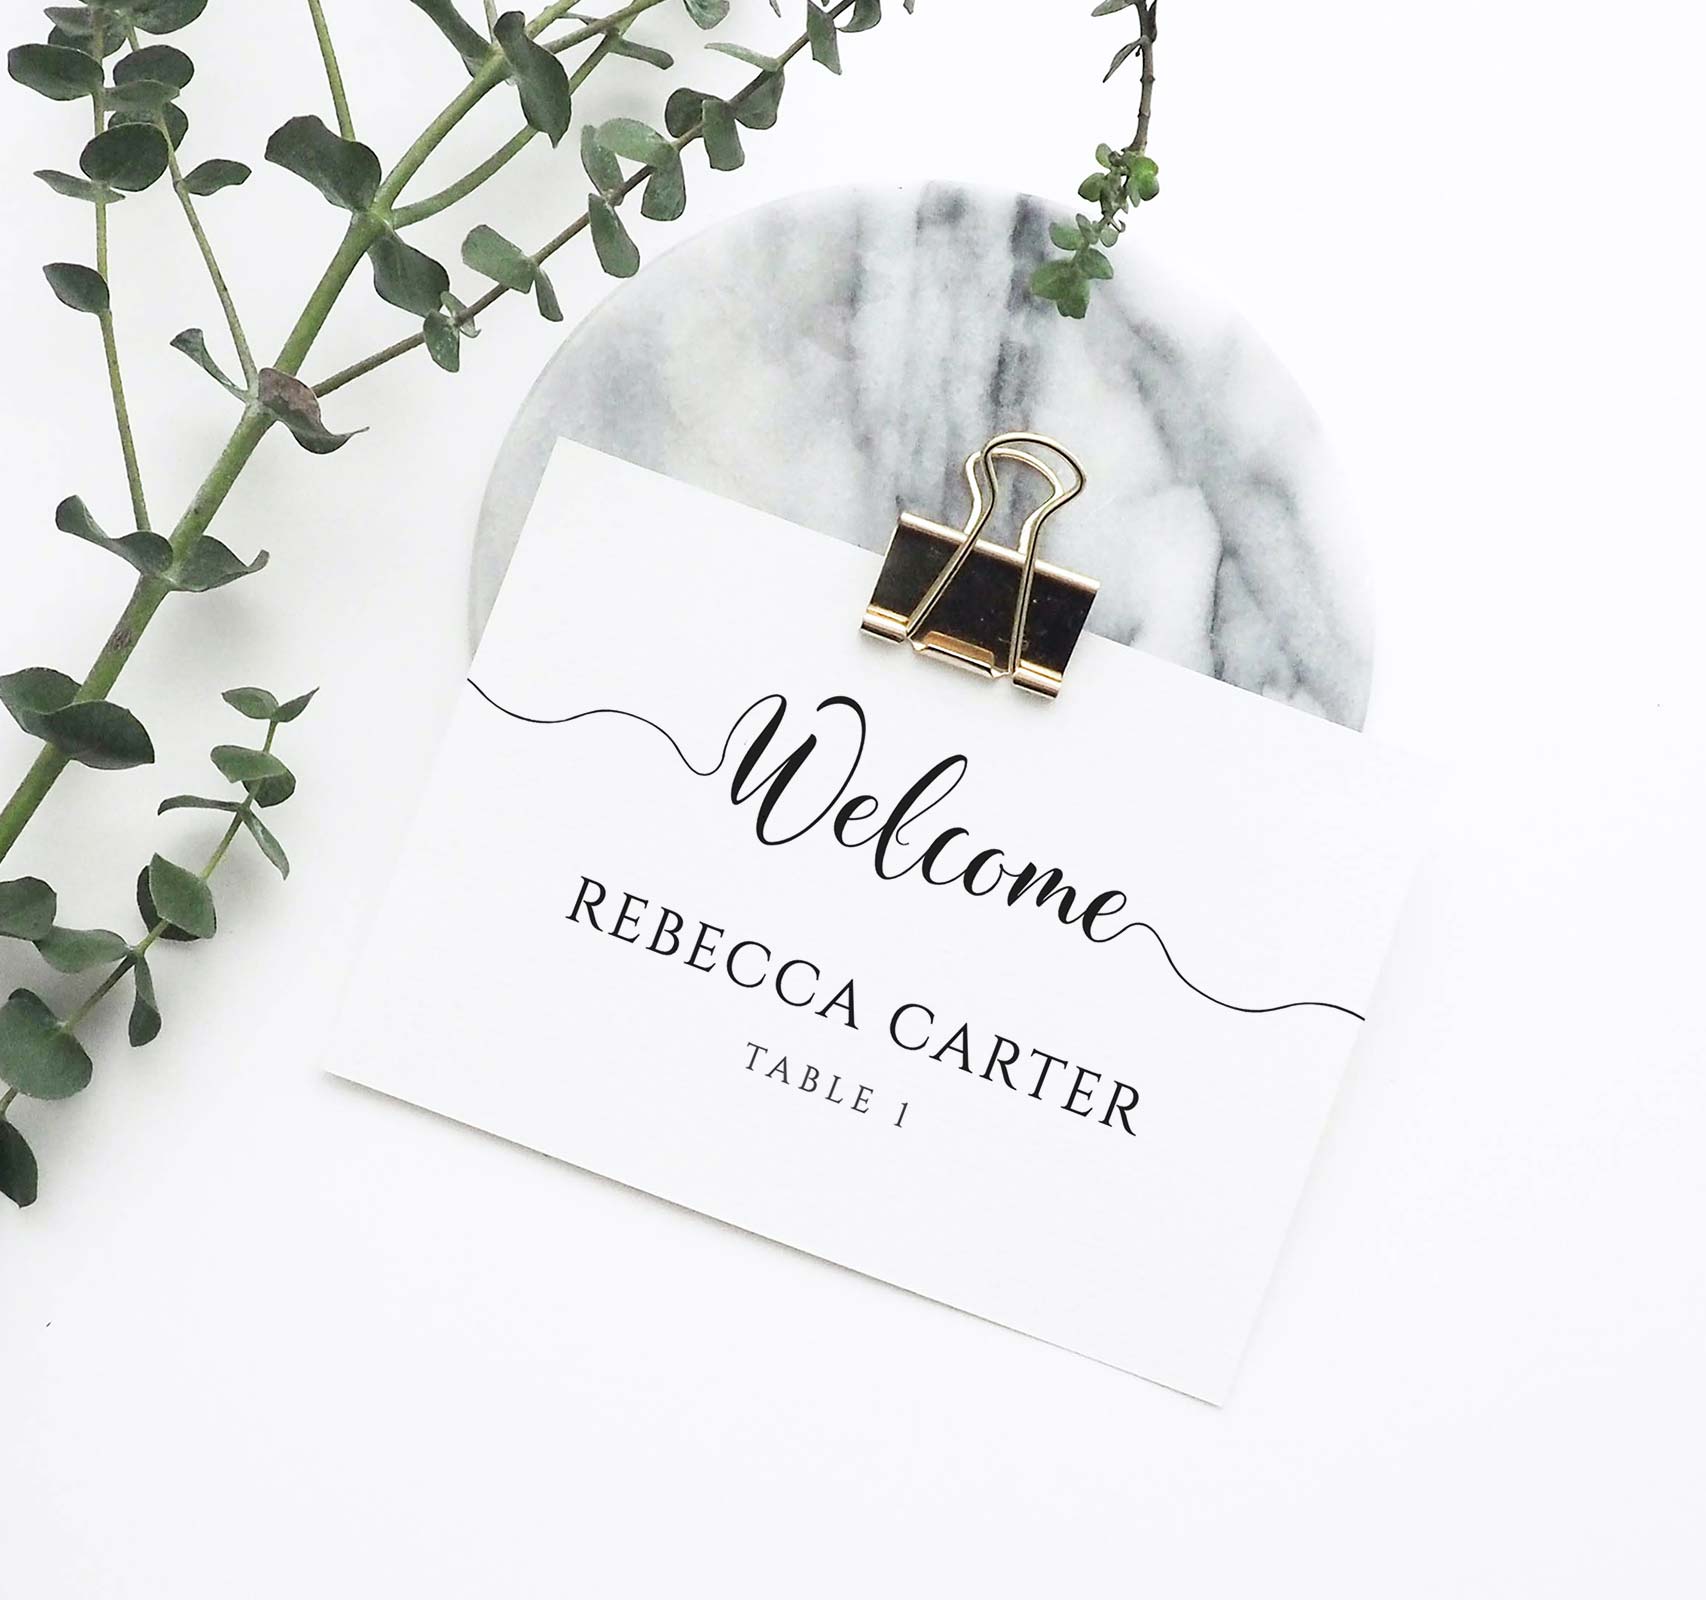 Wedding name card printed on white card